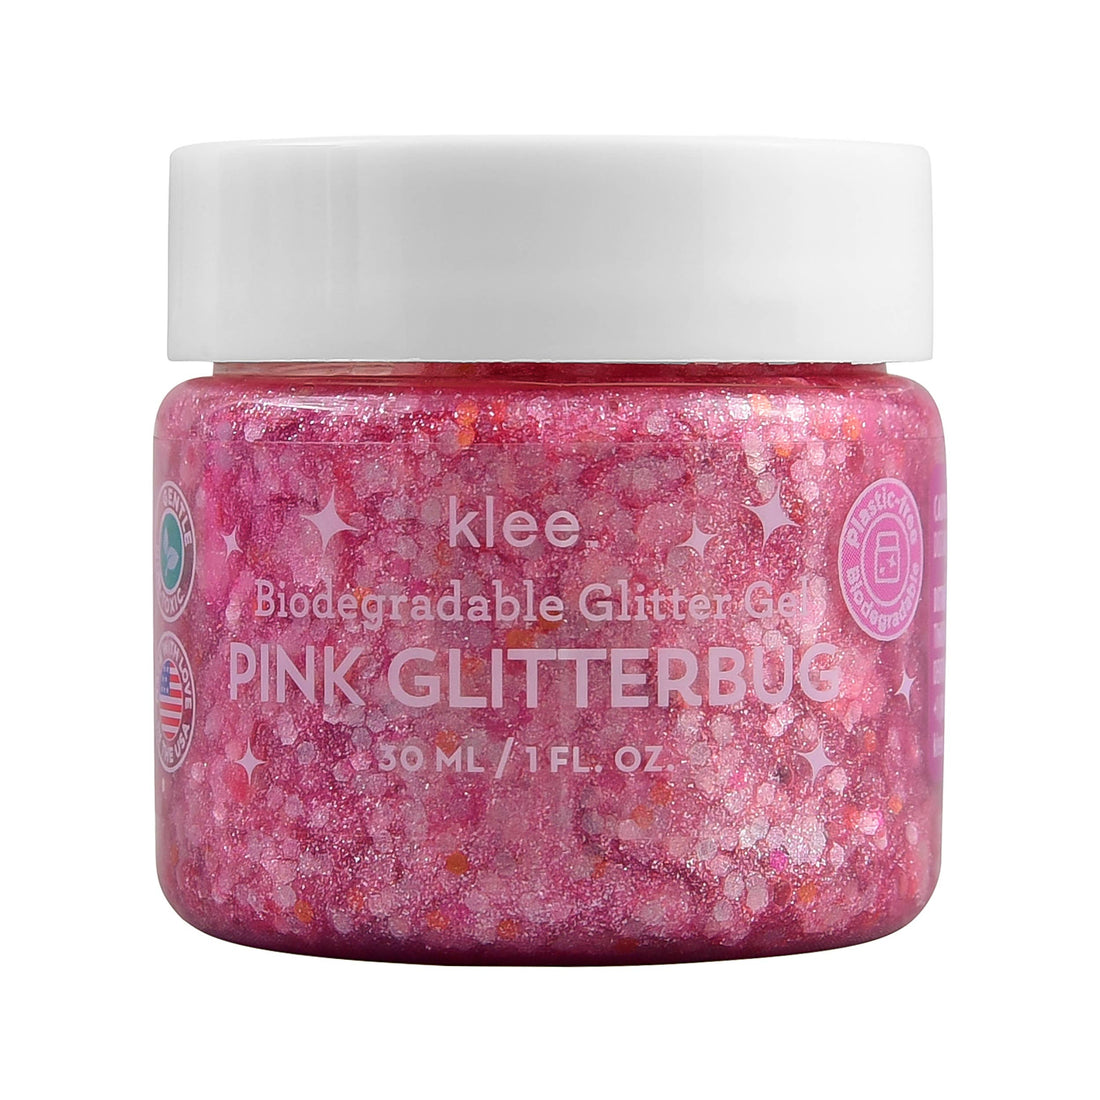 Klee Naturals Biodegradable Glitter Gel: Pink Glitterbug